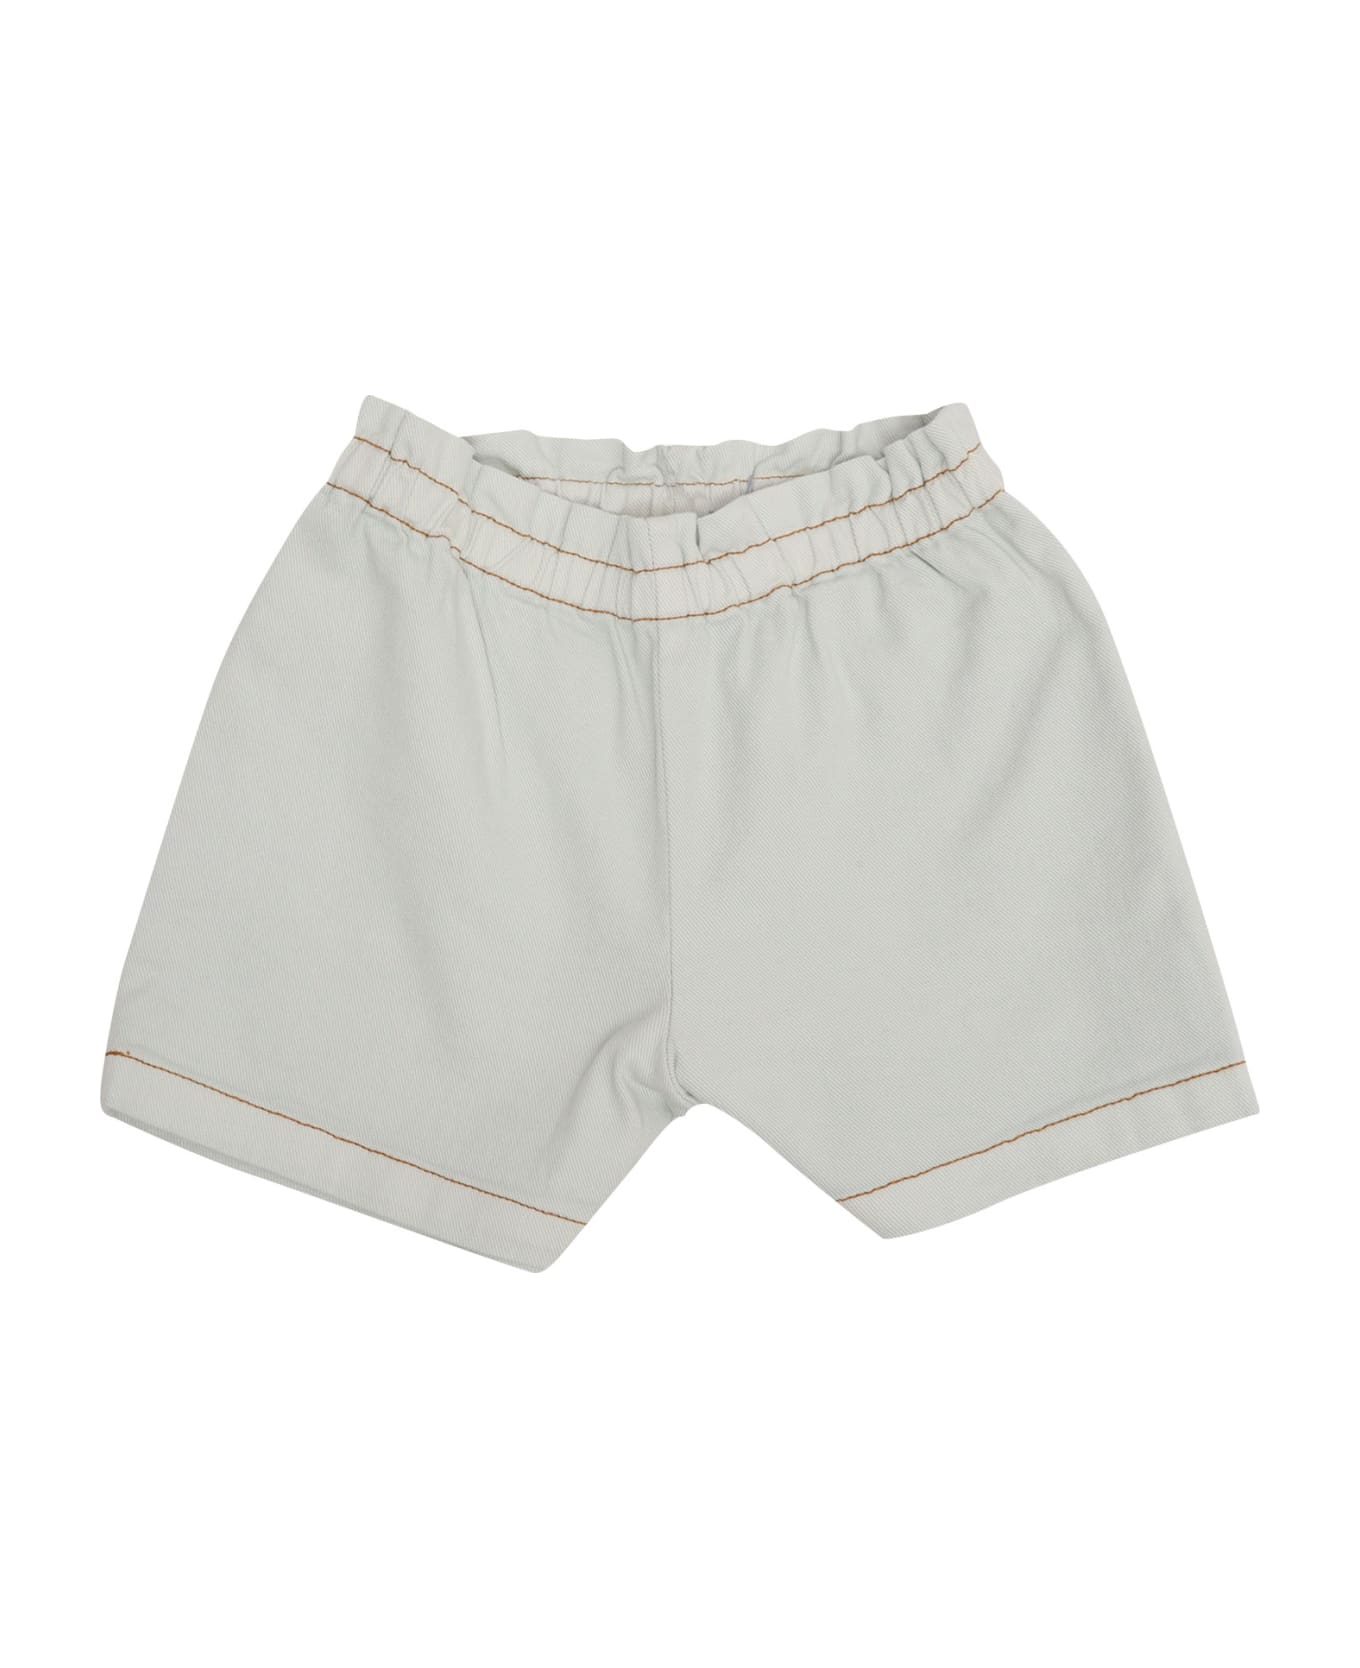 Bonpoint Cream Colored Shorts - PANNA